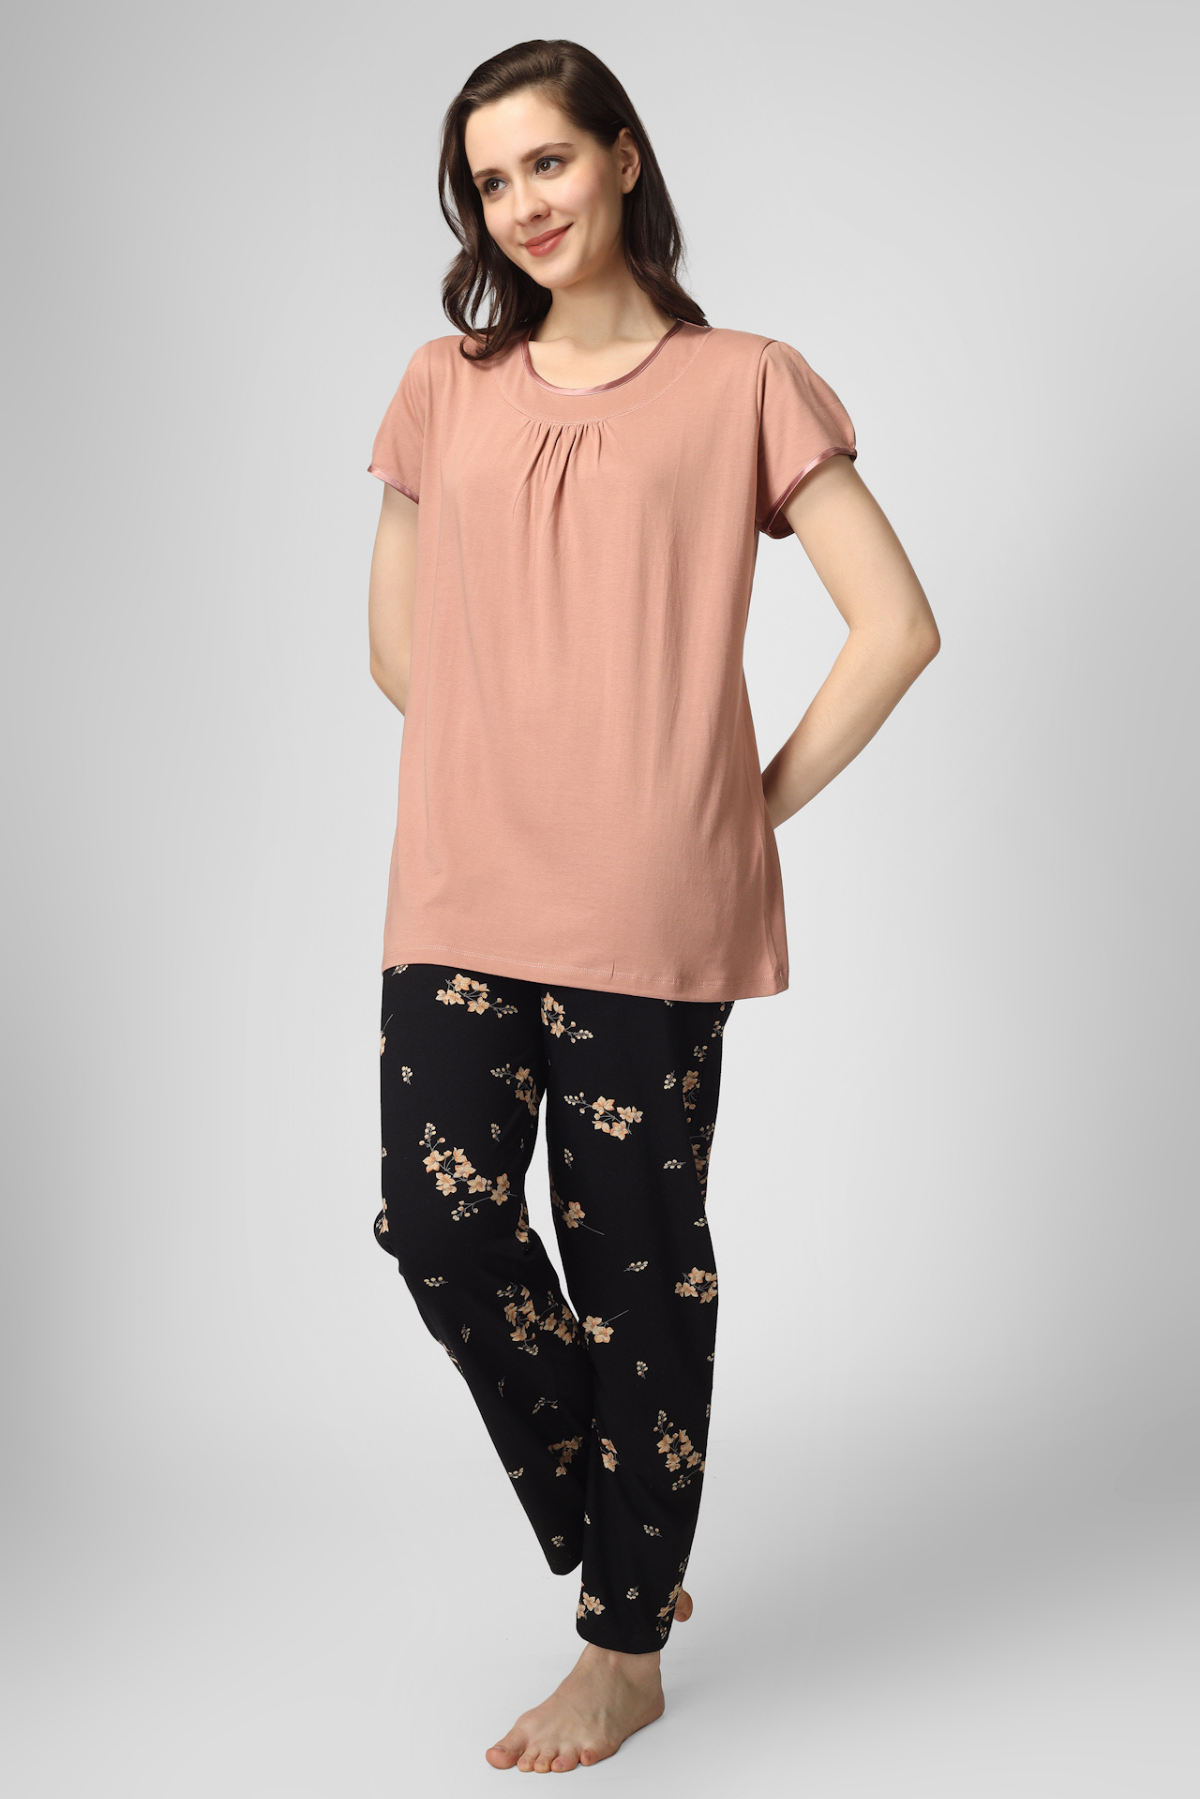 Rustic Elegance Pyjama Set For Women 5